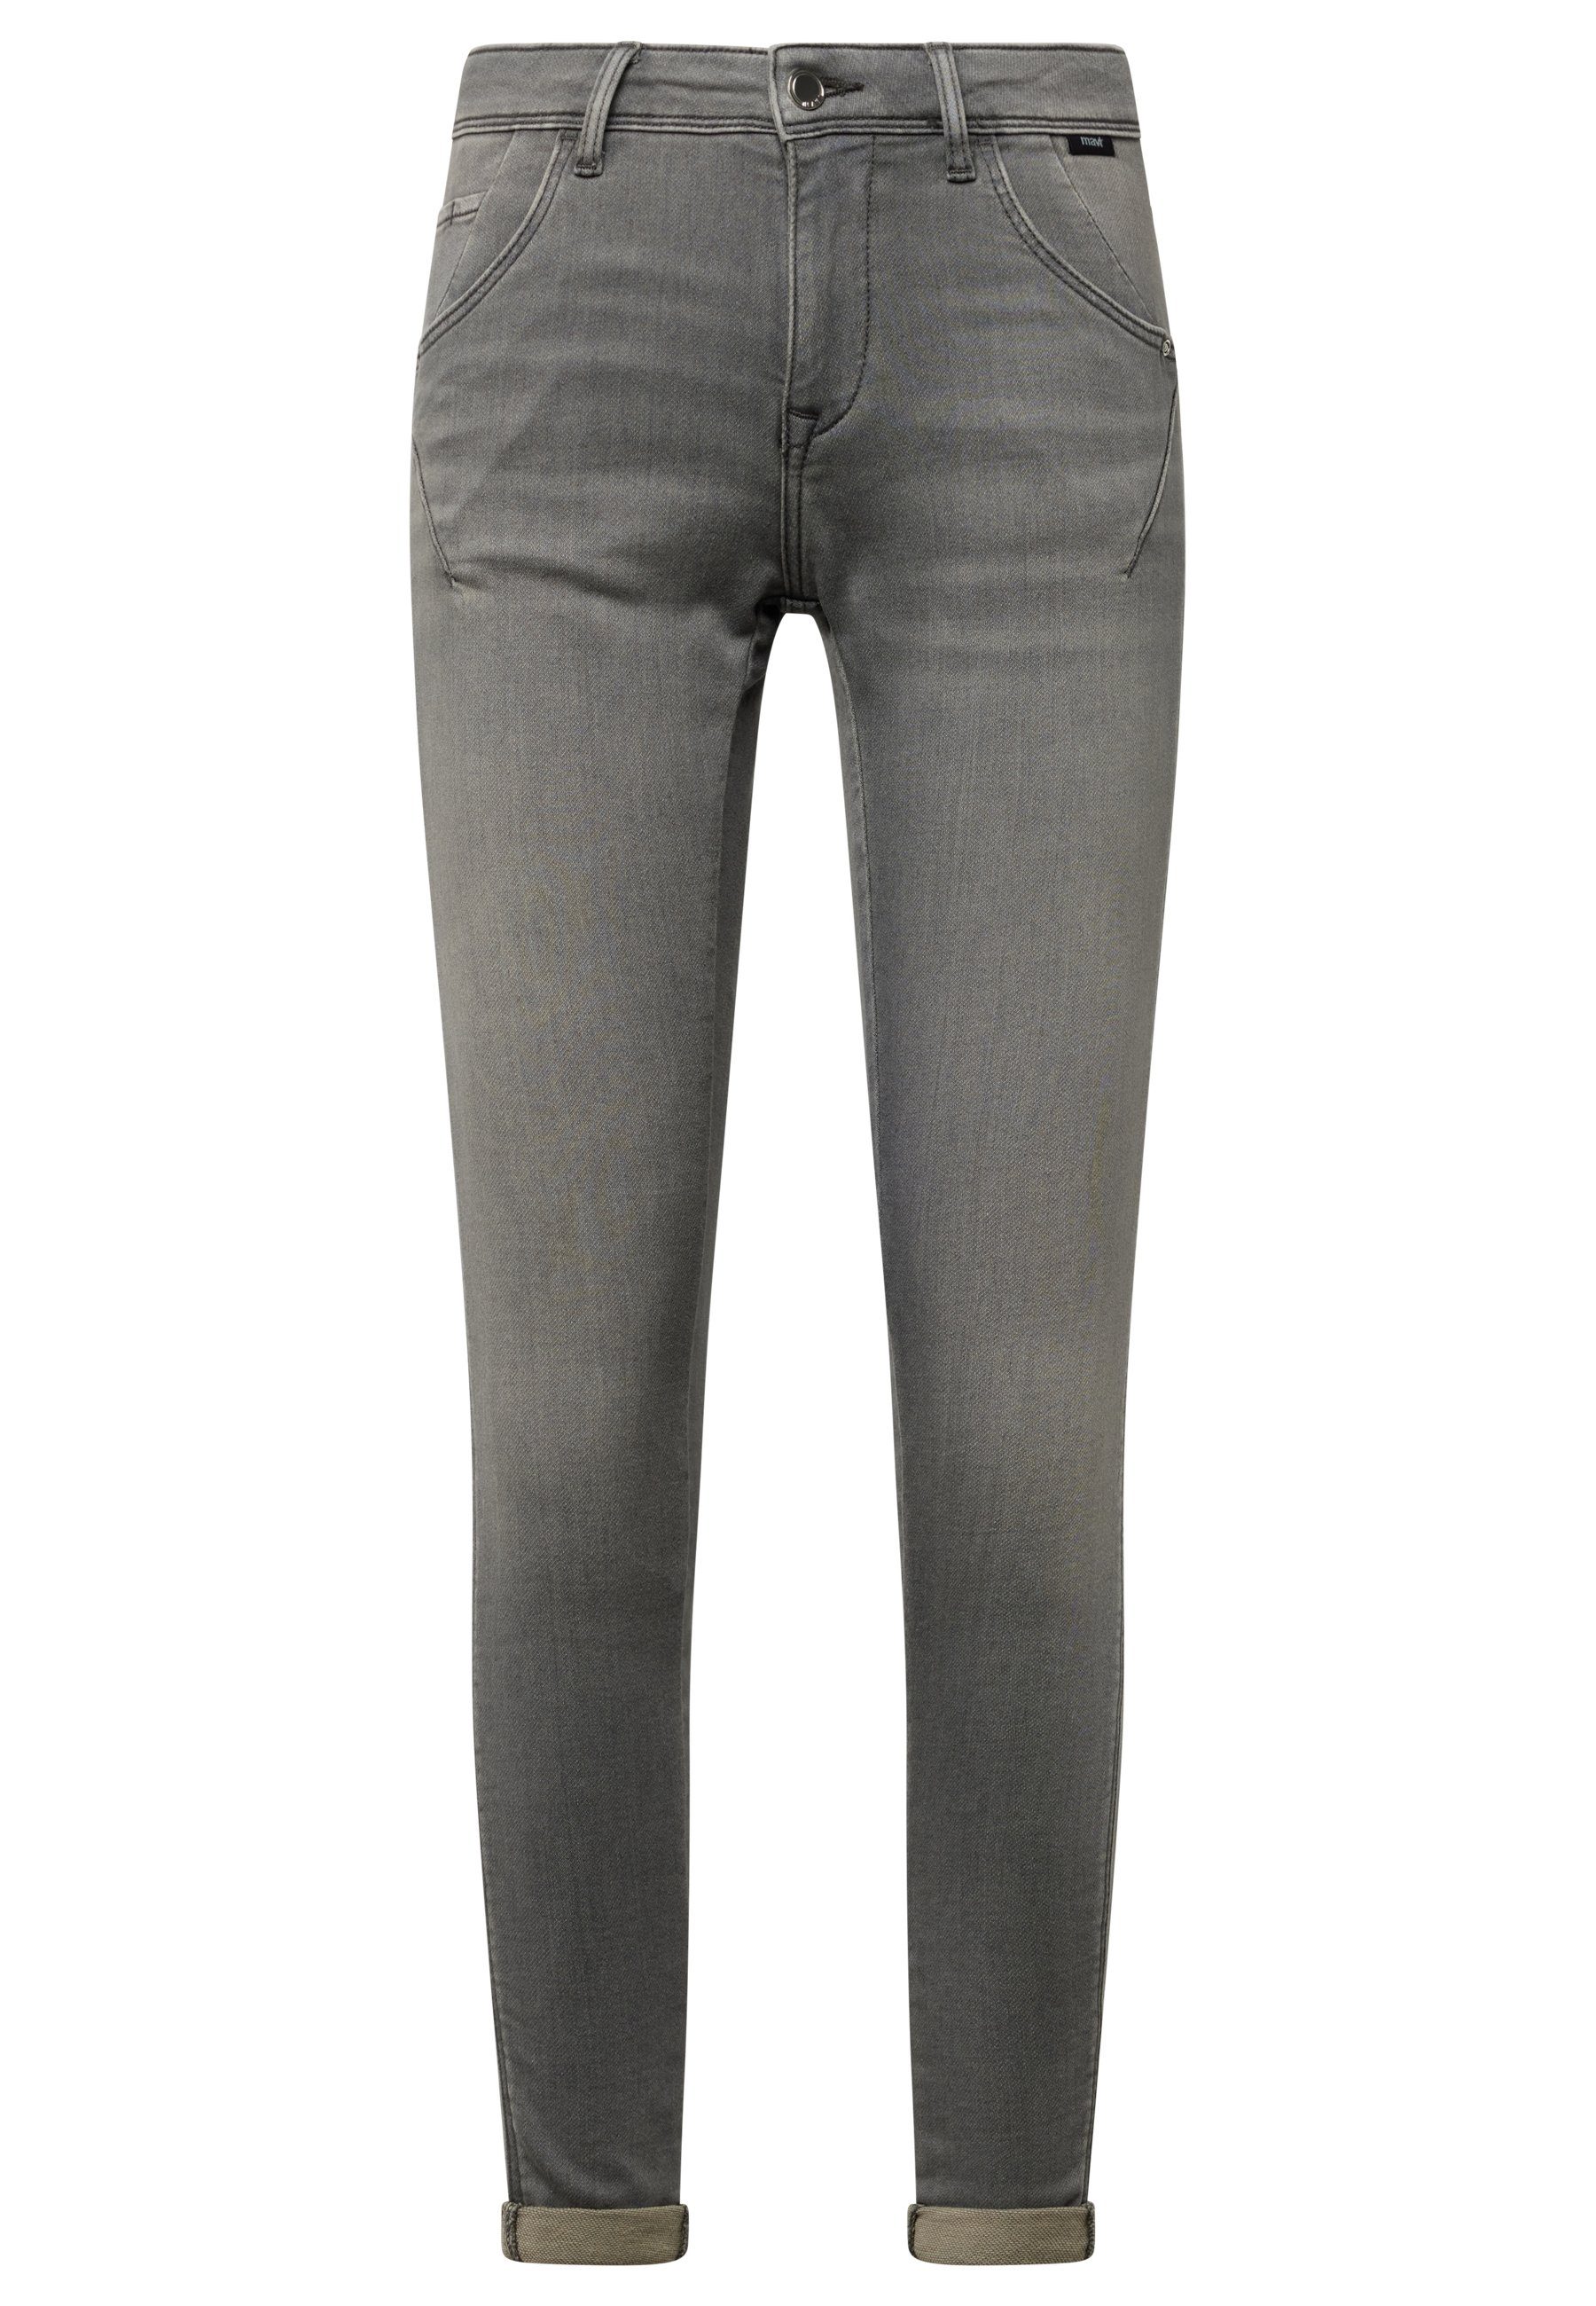 Jeans LEXY Cropped Super Skinny Röhrenjeans Mavi